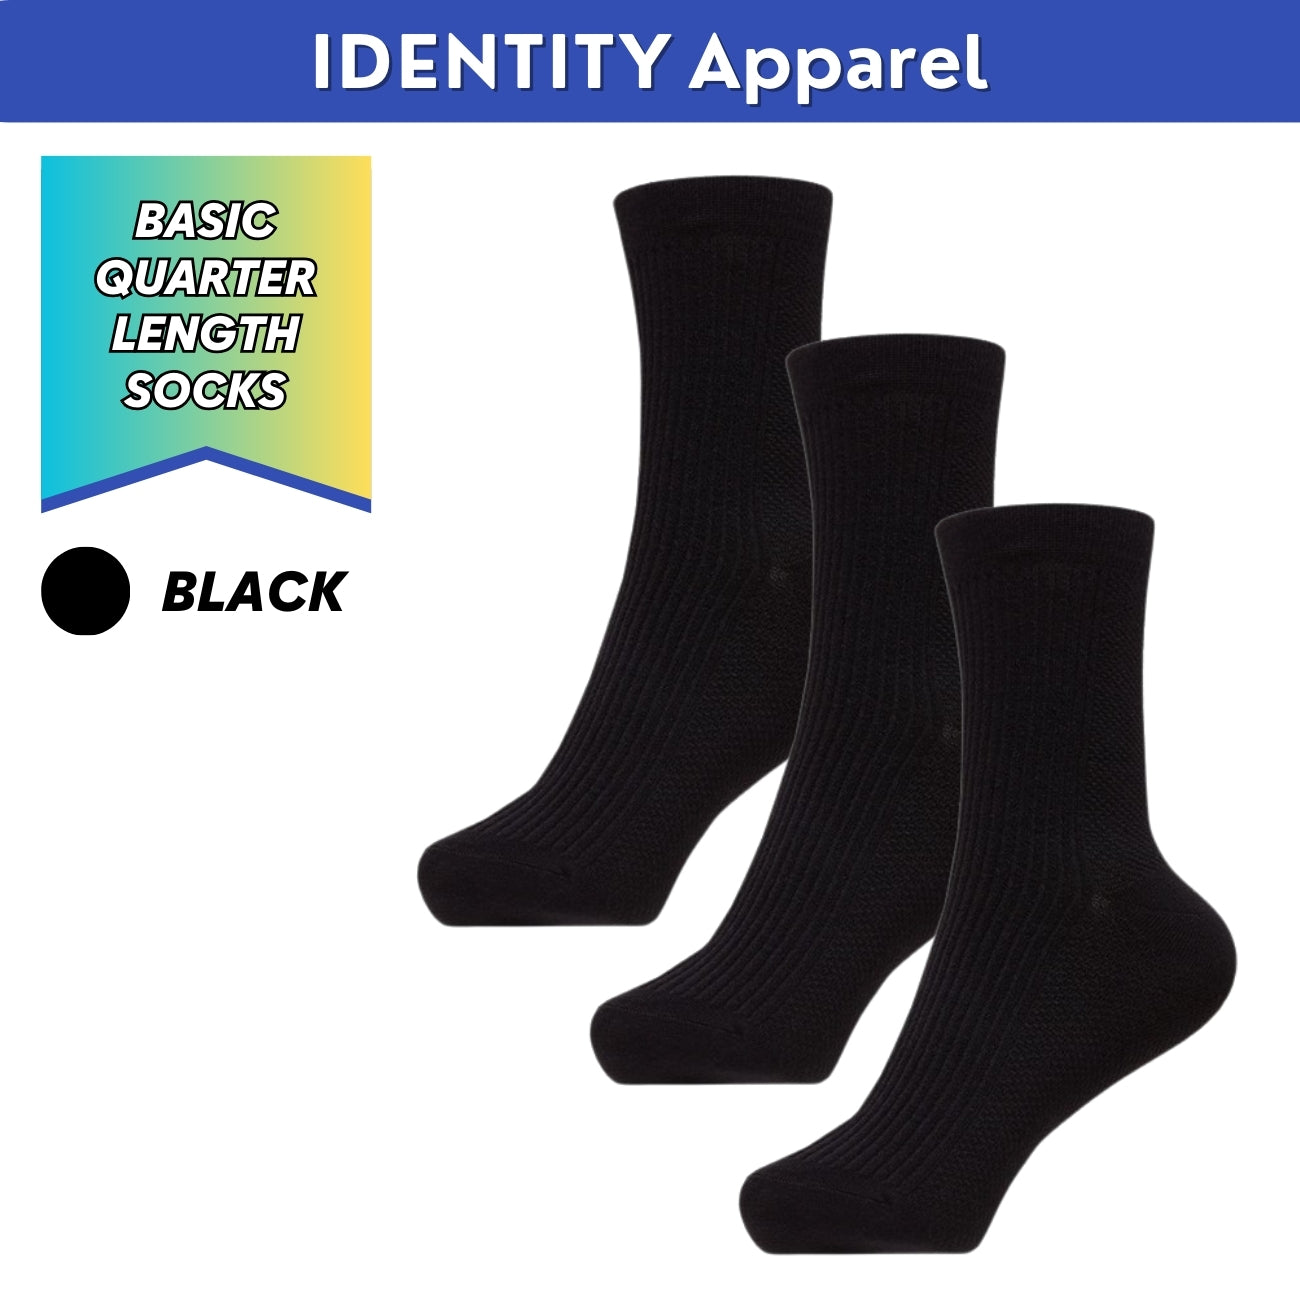 Basic Multifunction Quarter Length Cotton Socks - IDENTITY Apparel Shop